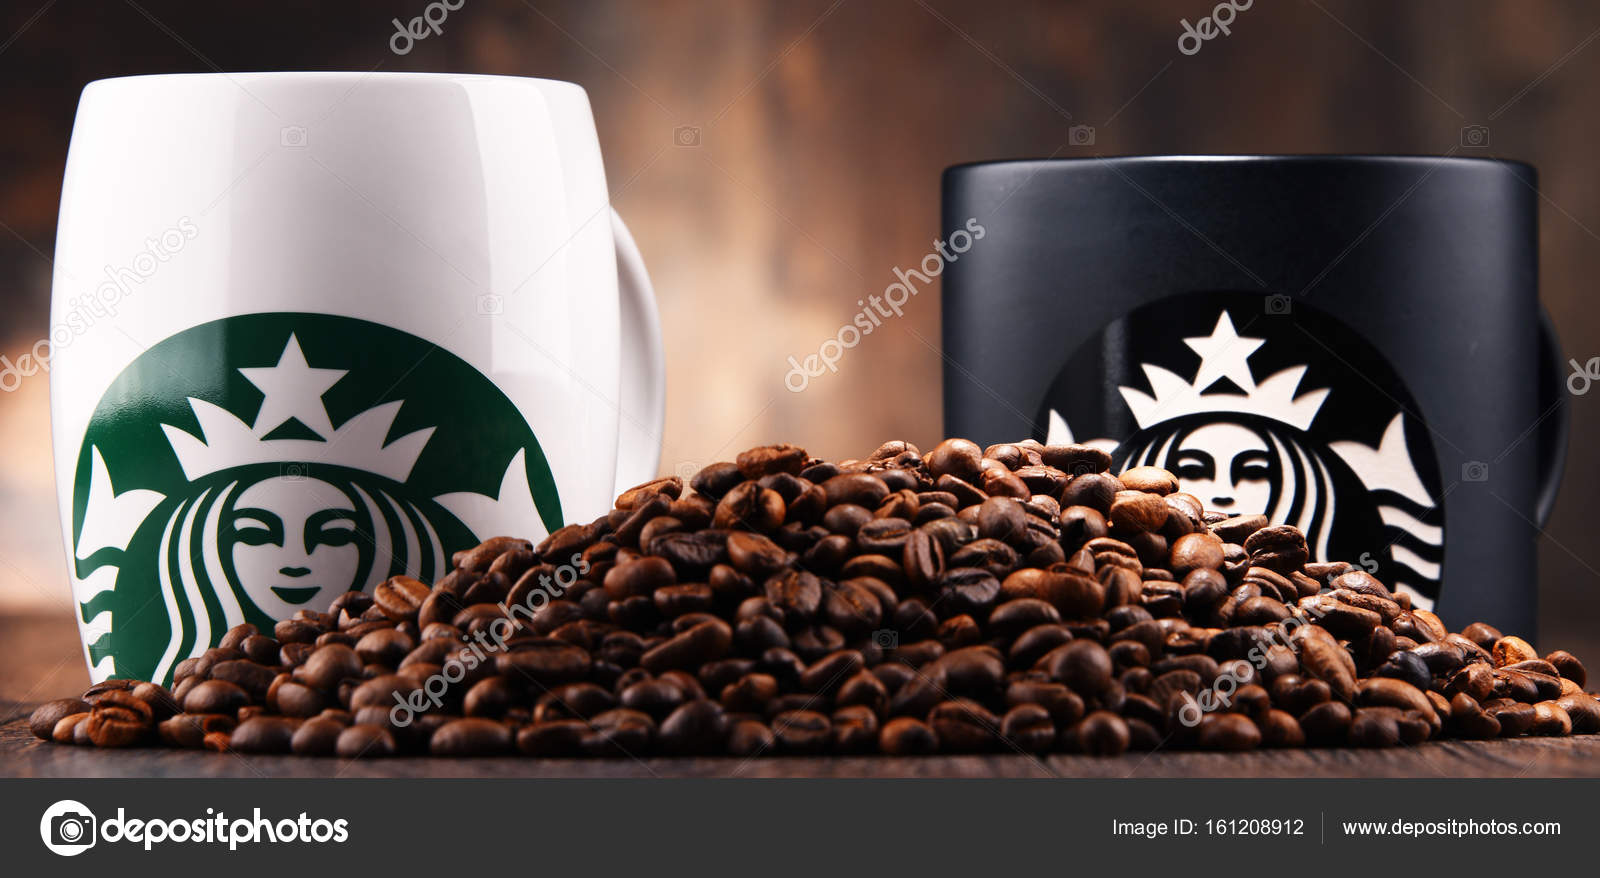 Starbucks coffee cup – Stock Editorial Photo © norgallery #110834502